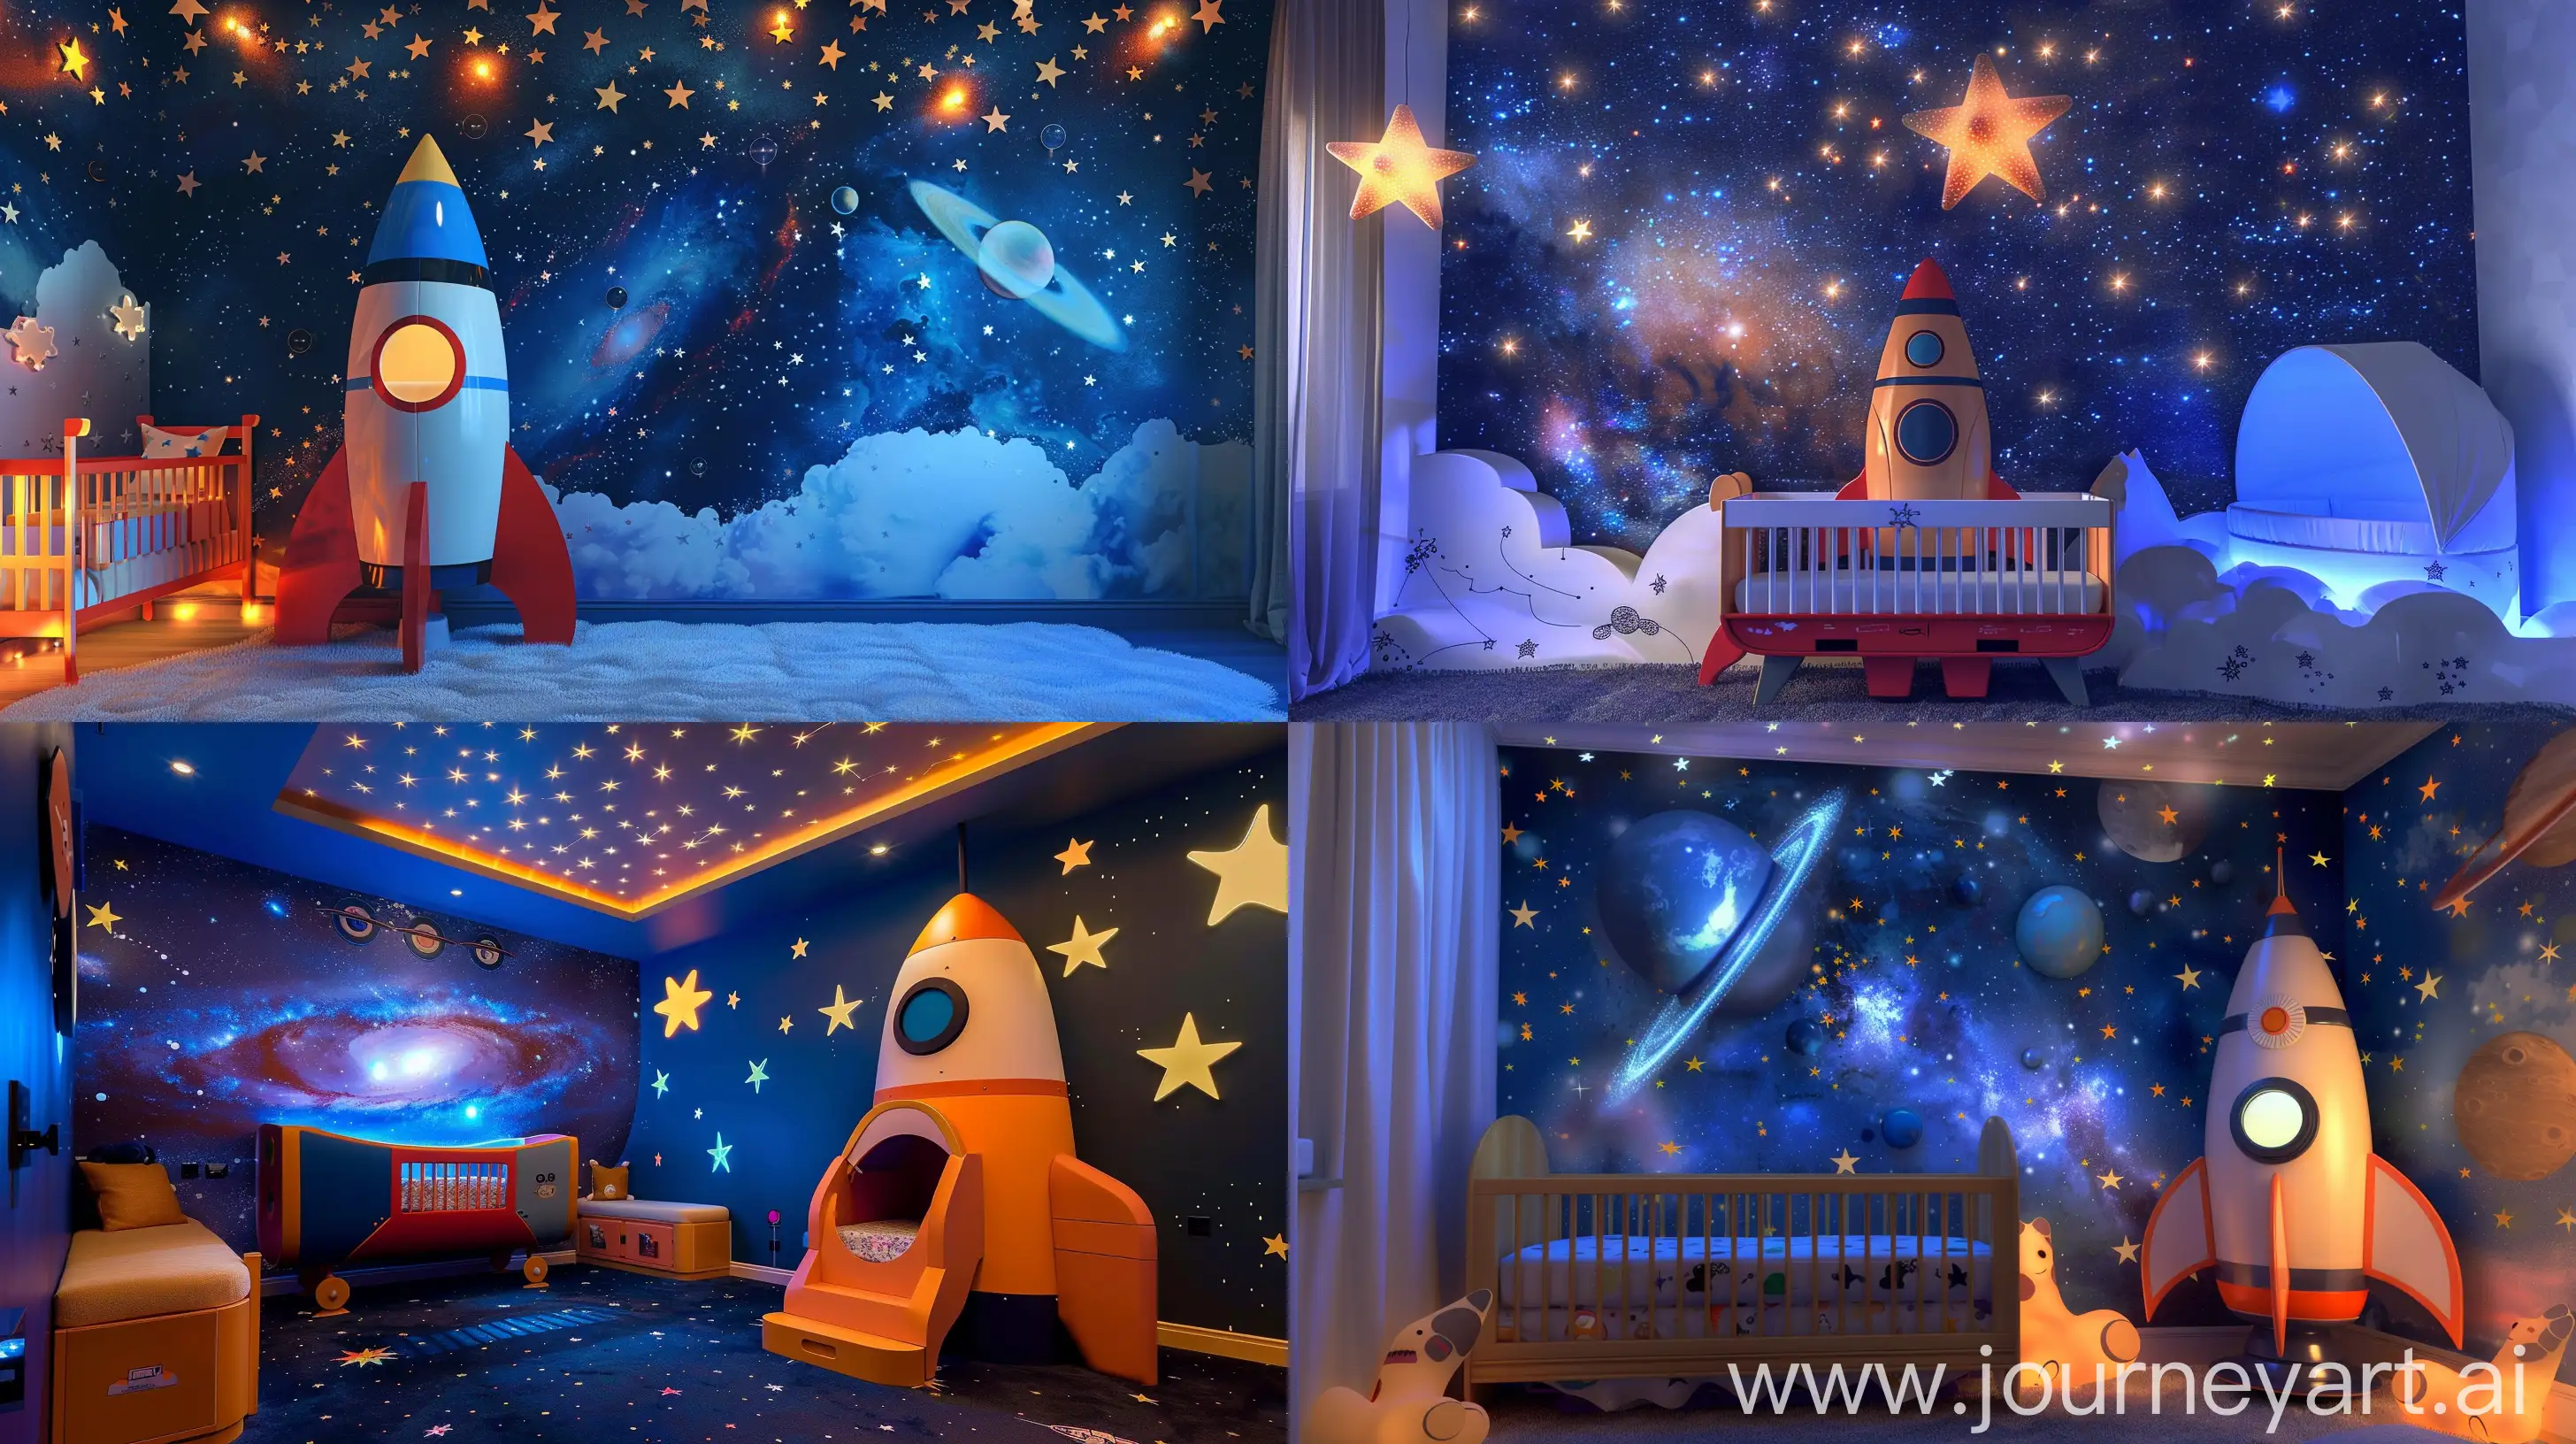 Cosmic-Nursery-Decor-Rocket-Ship-Crib-and-Glowing-Galaxy-Wall-Mural